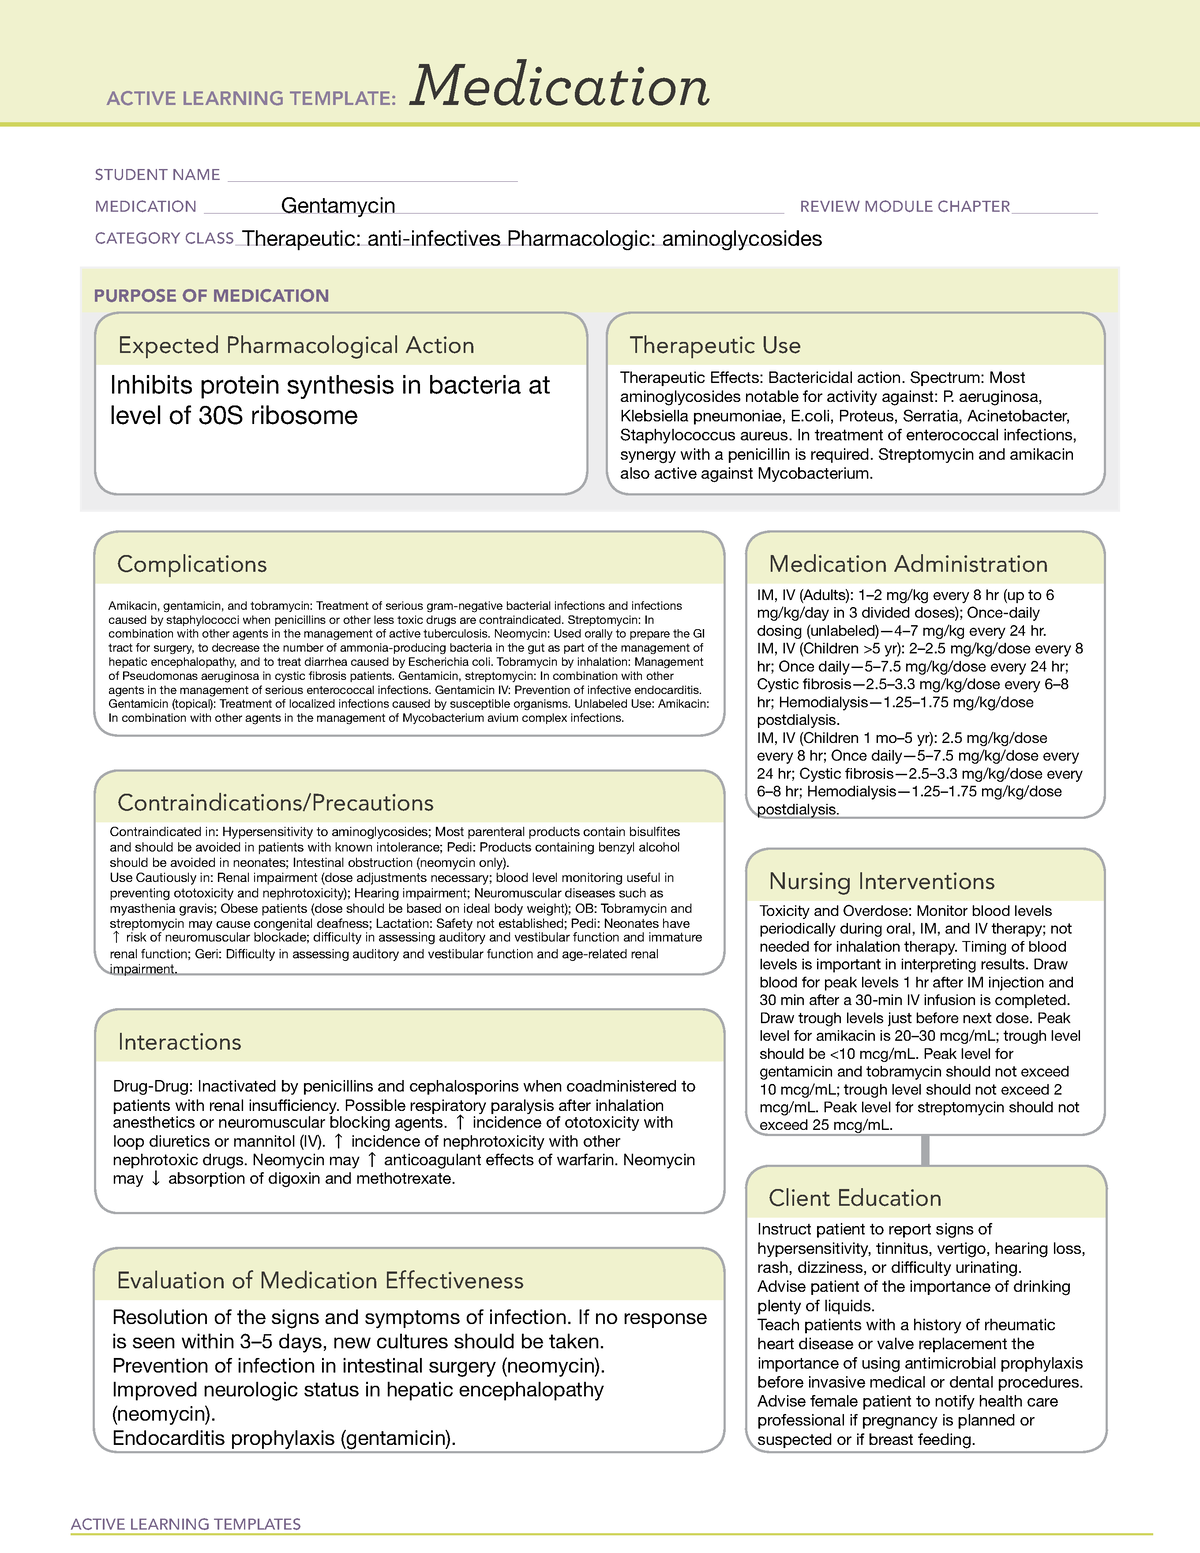 gentamycin-medication-template-active-learning-templates-medication-student-name-studocu